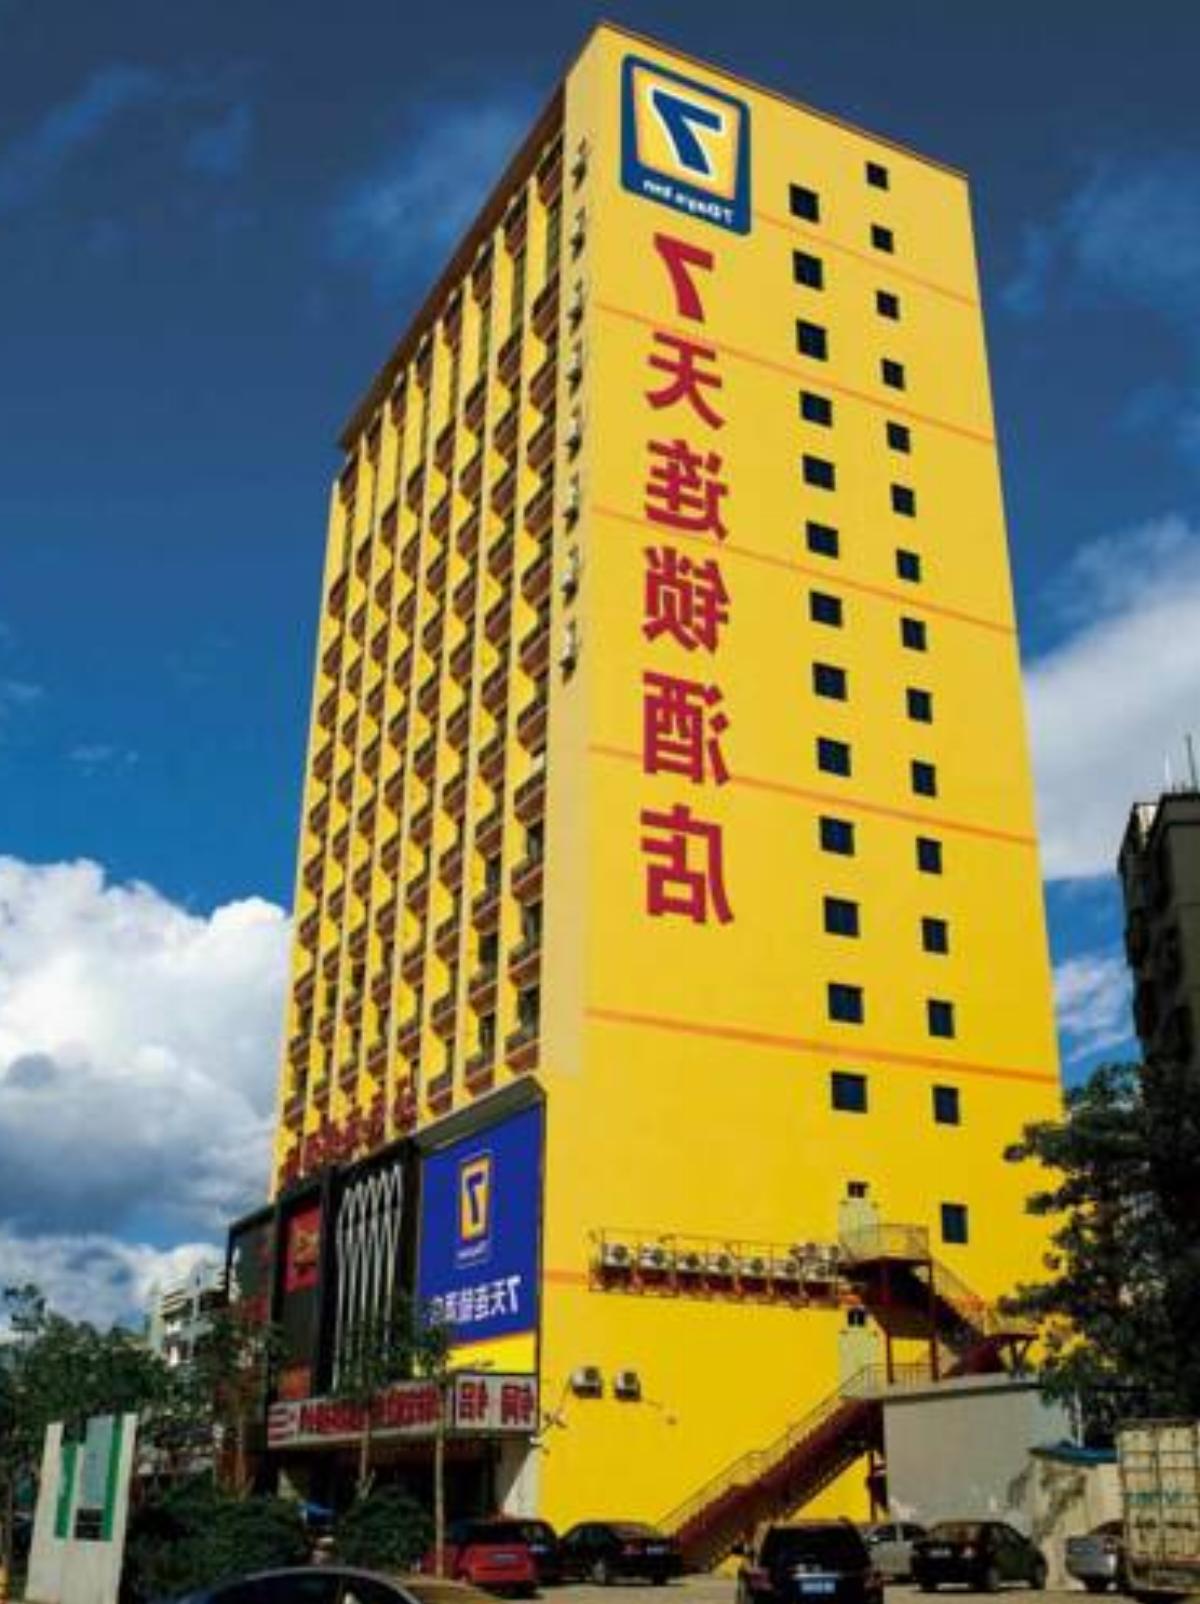 7Days Inn Tianjin Foriegn Goods Market Hotel Binhai China